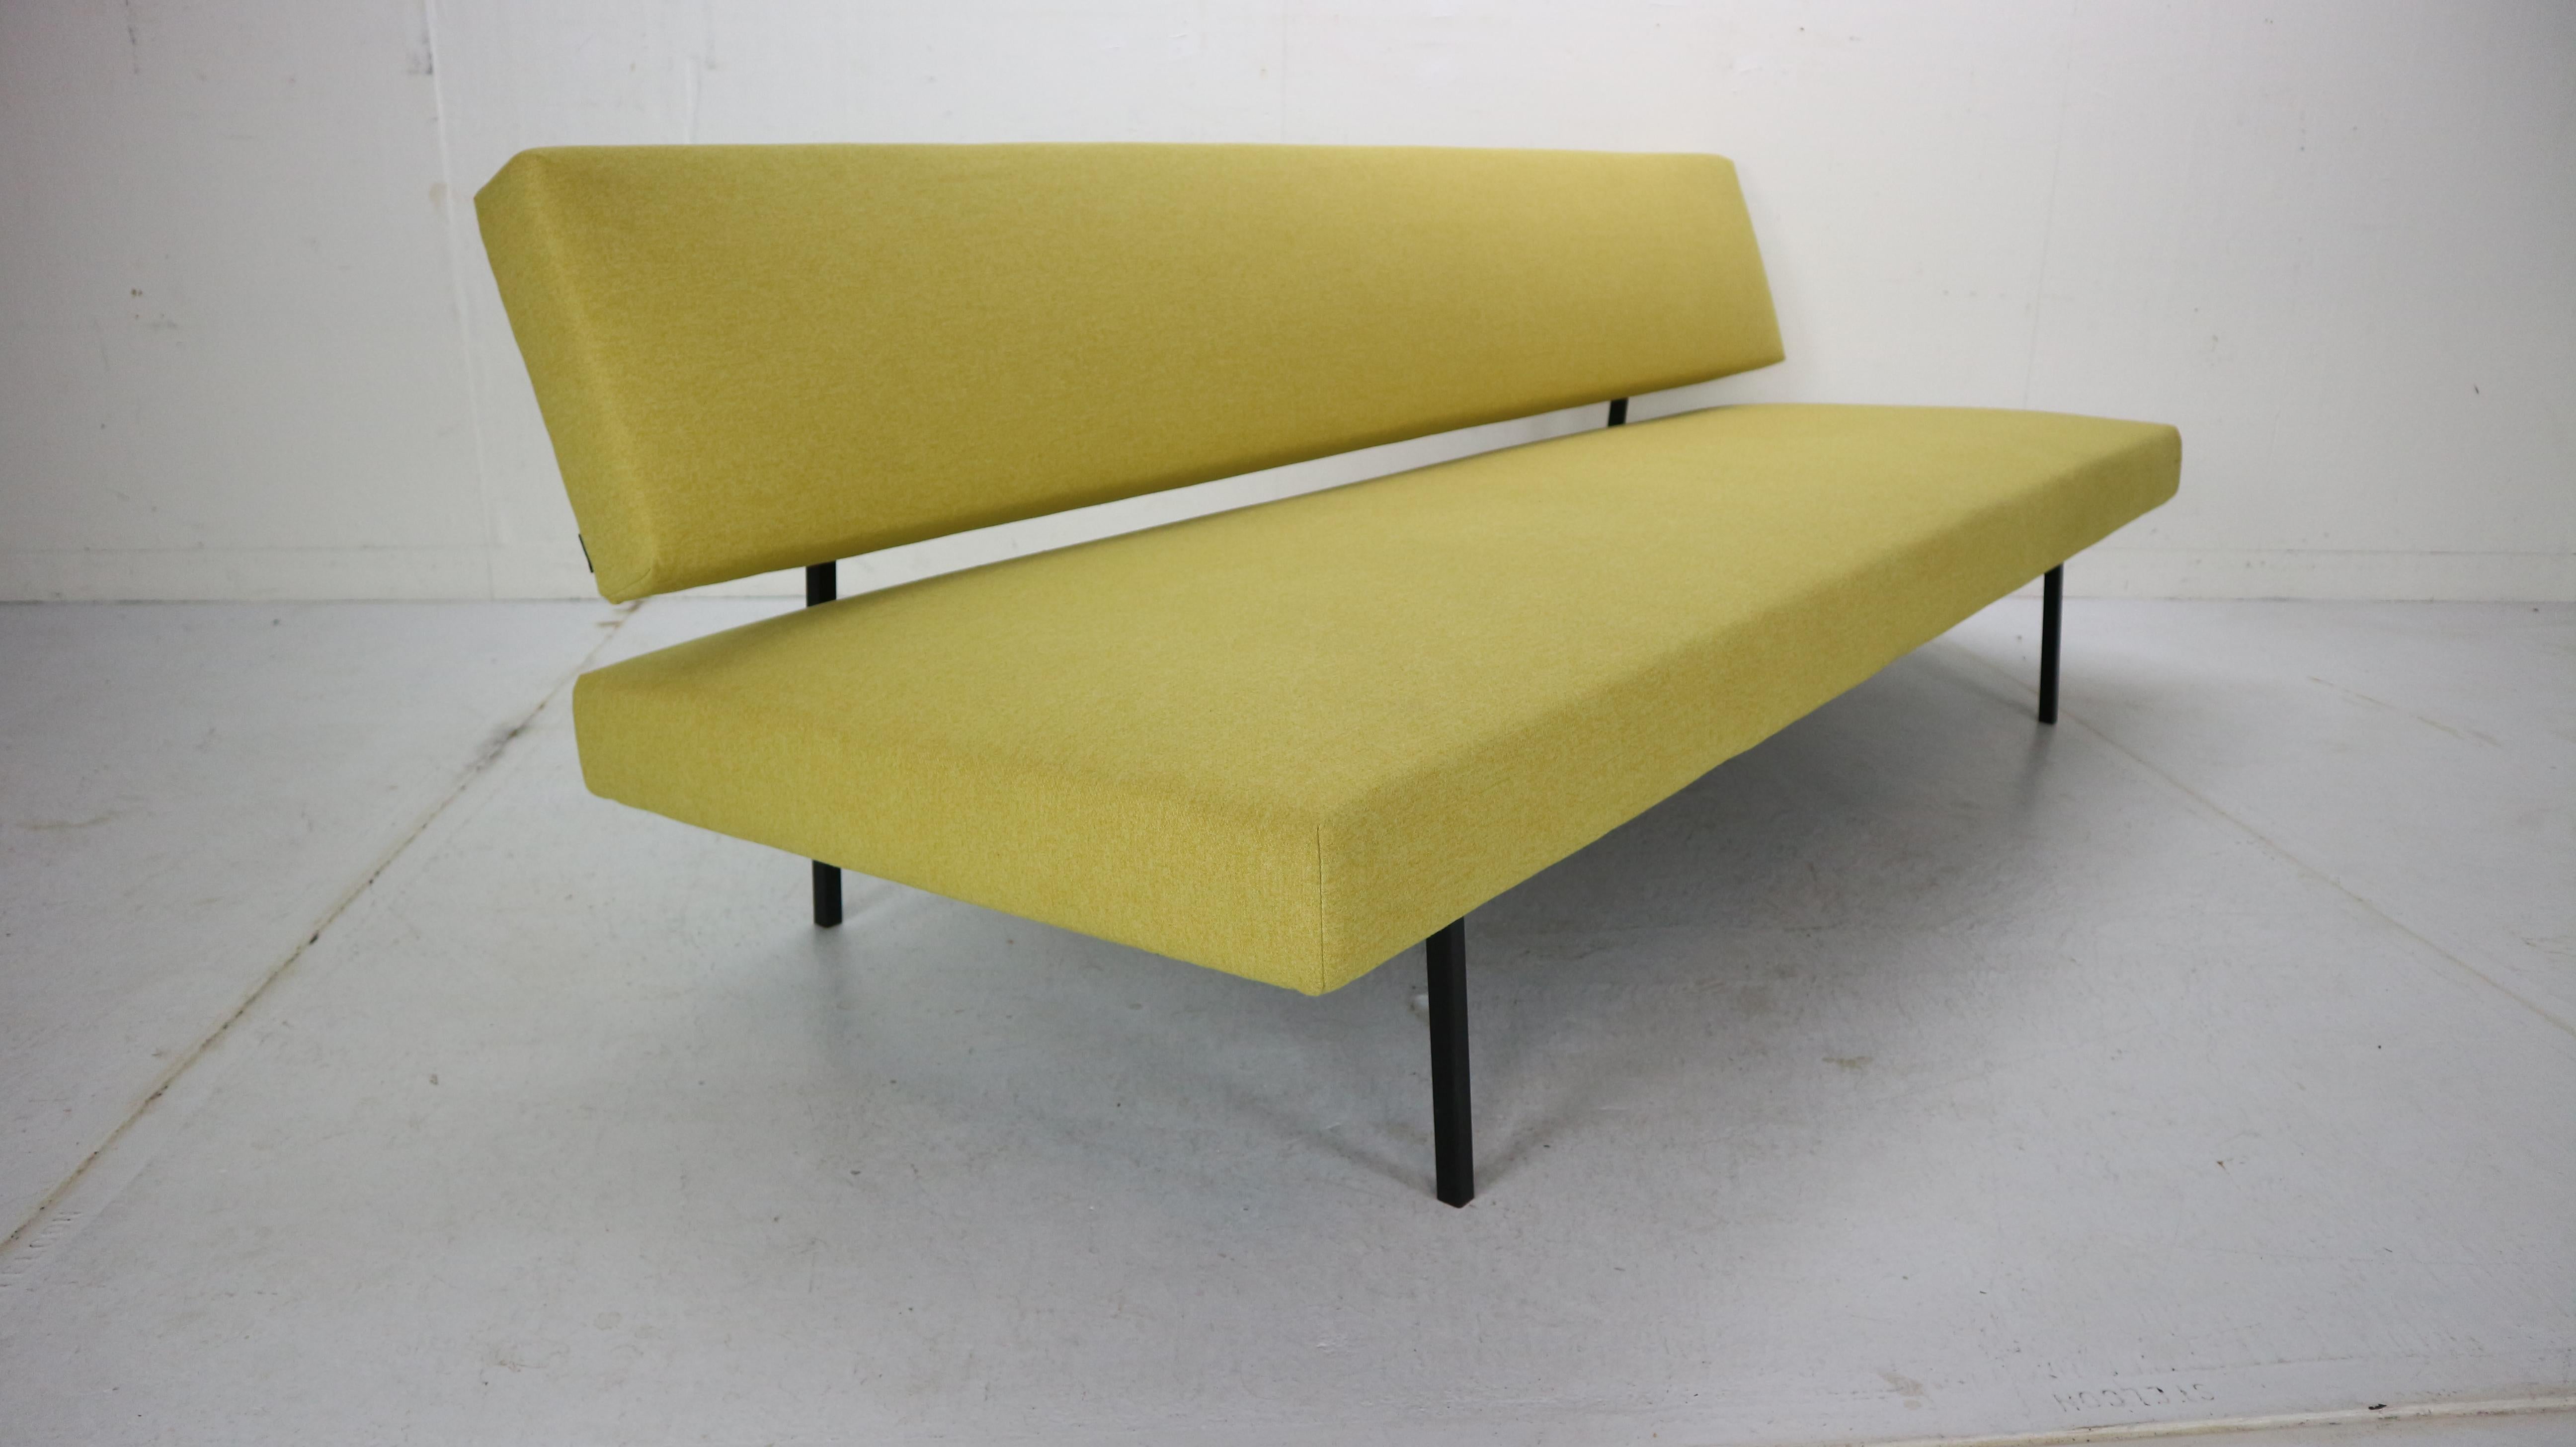 Mid-Century Modern Rob Parry Daybed Sleeper Sofa for Gederland, Dutch Modern Design, 1960s